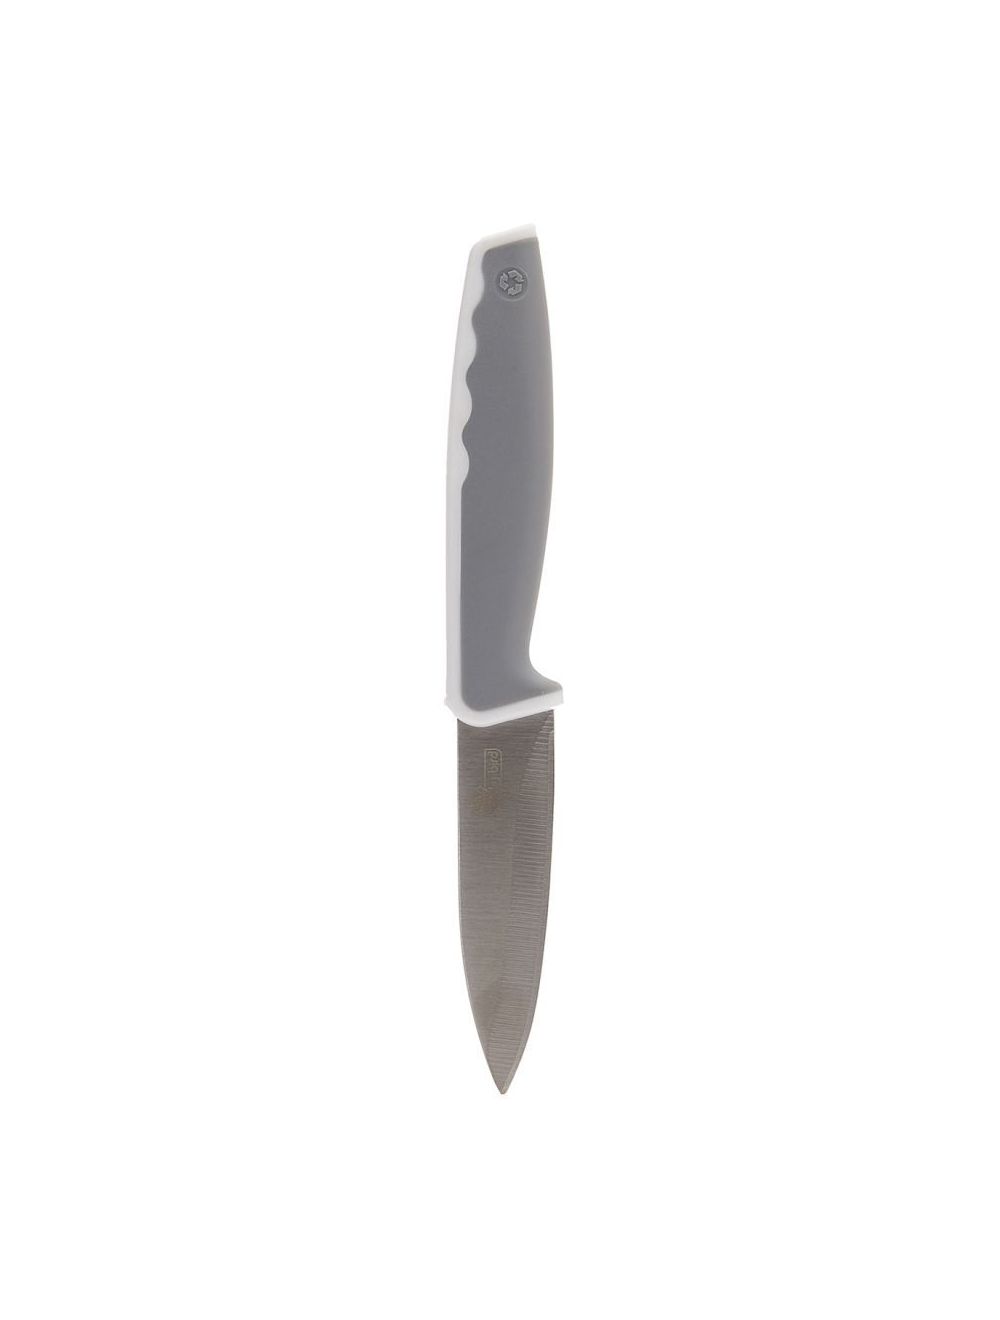 Elianware Stainless Steel Fruit Knife